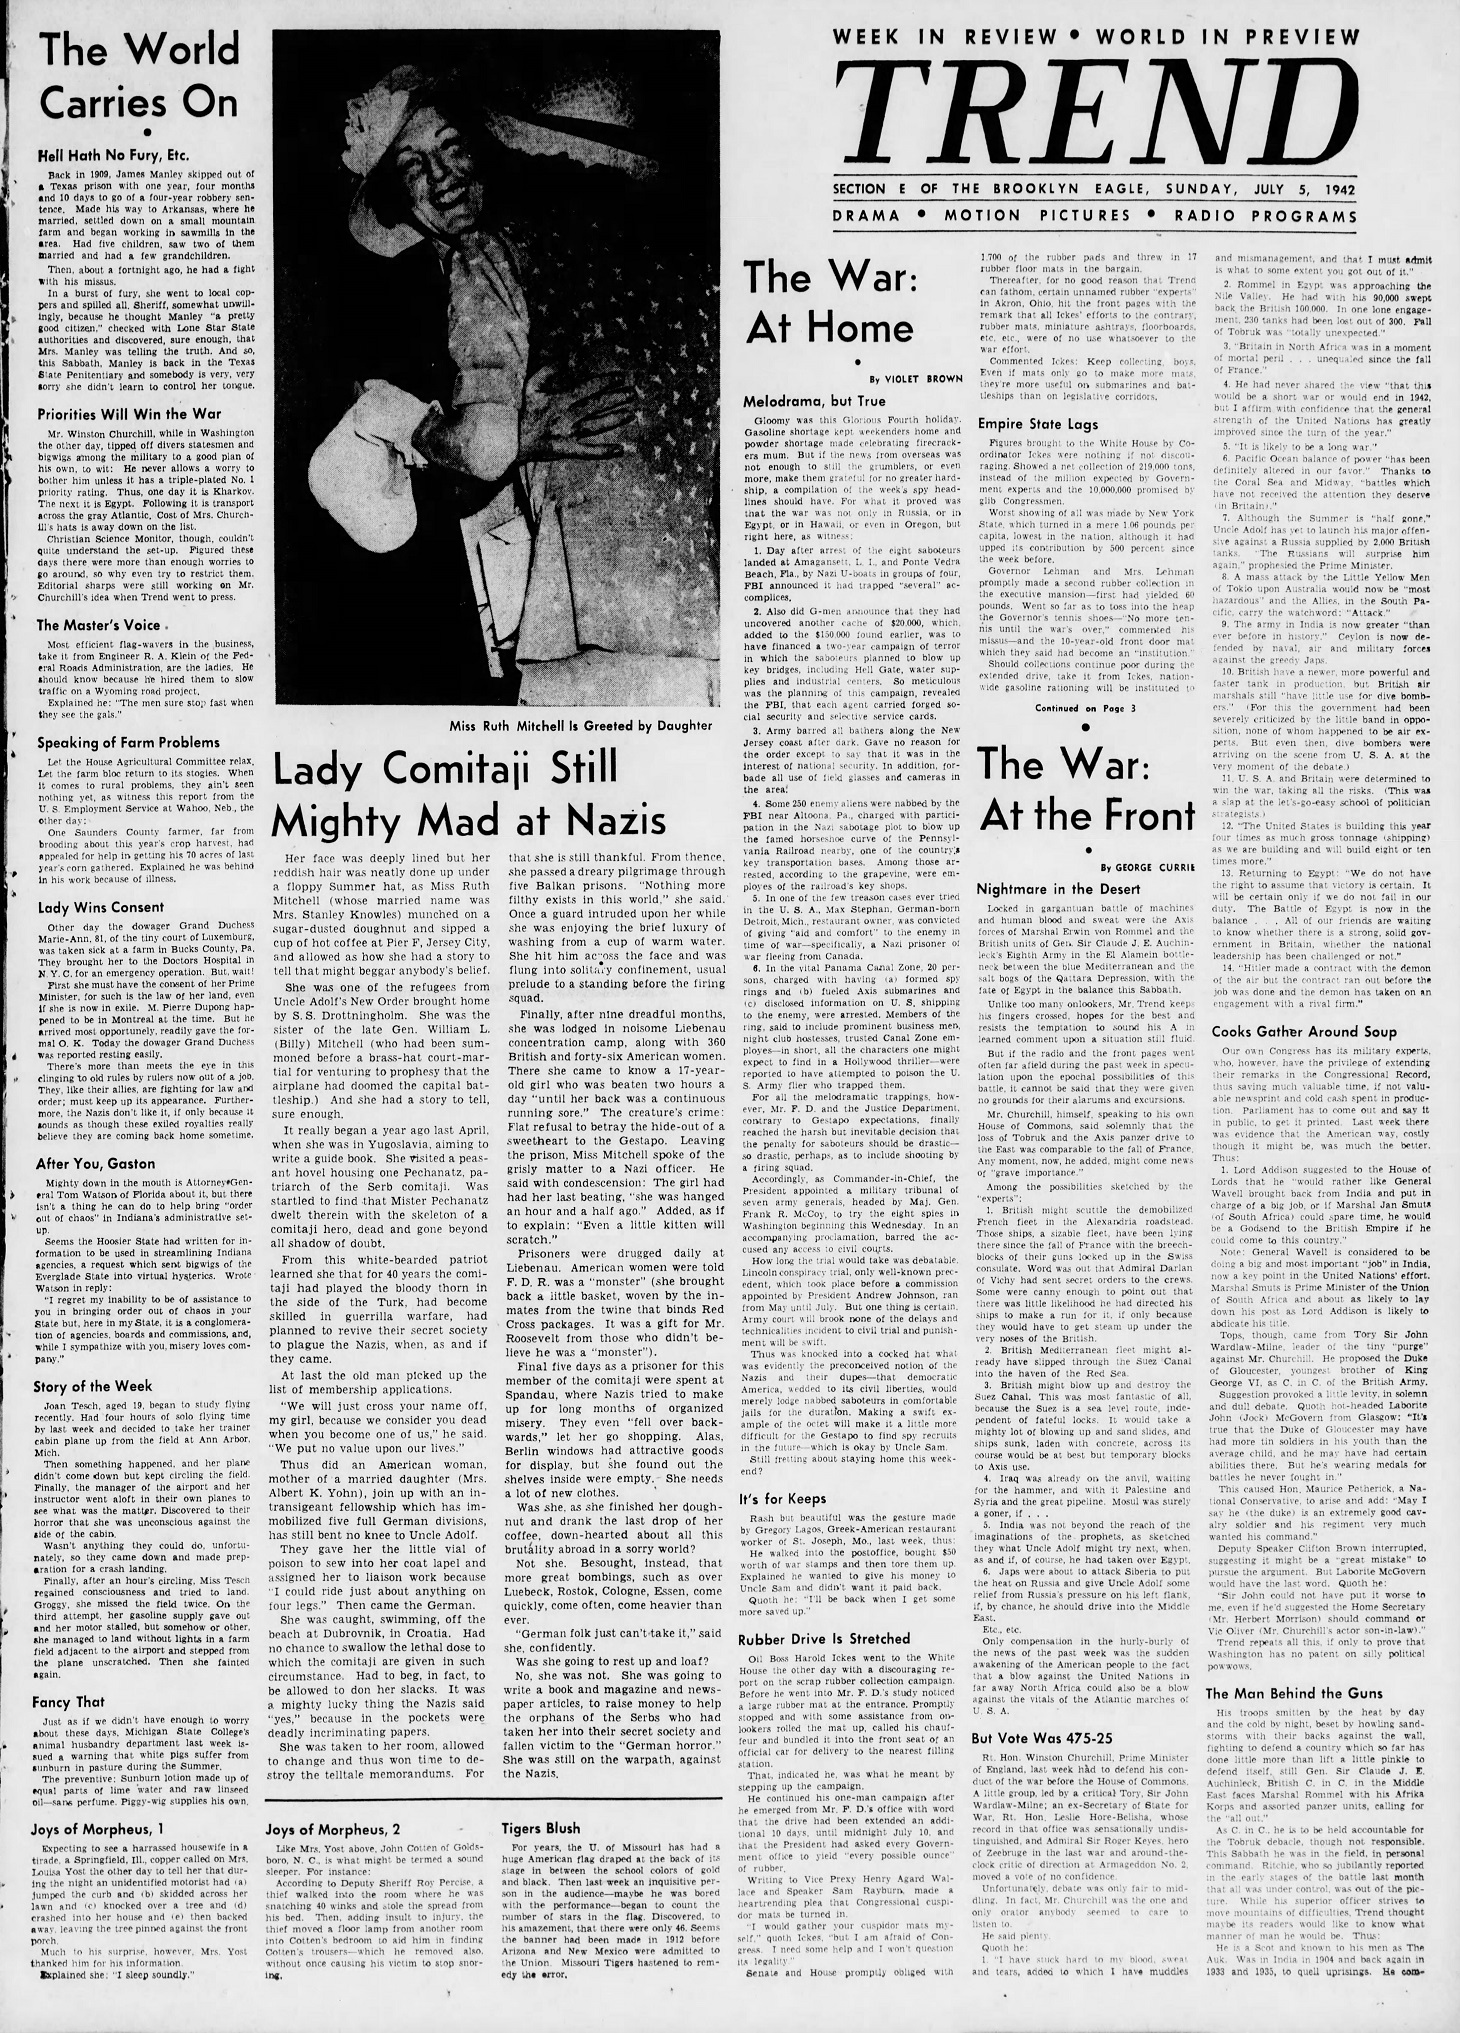 The_Brooklyn_Daily_Eagle_Sun__Jul_5__1942_(4).jpg